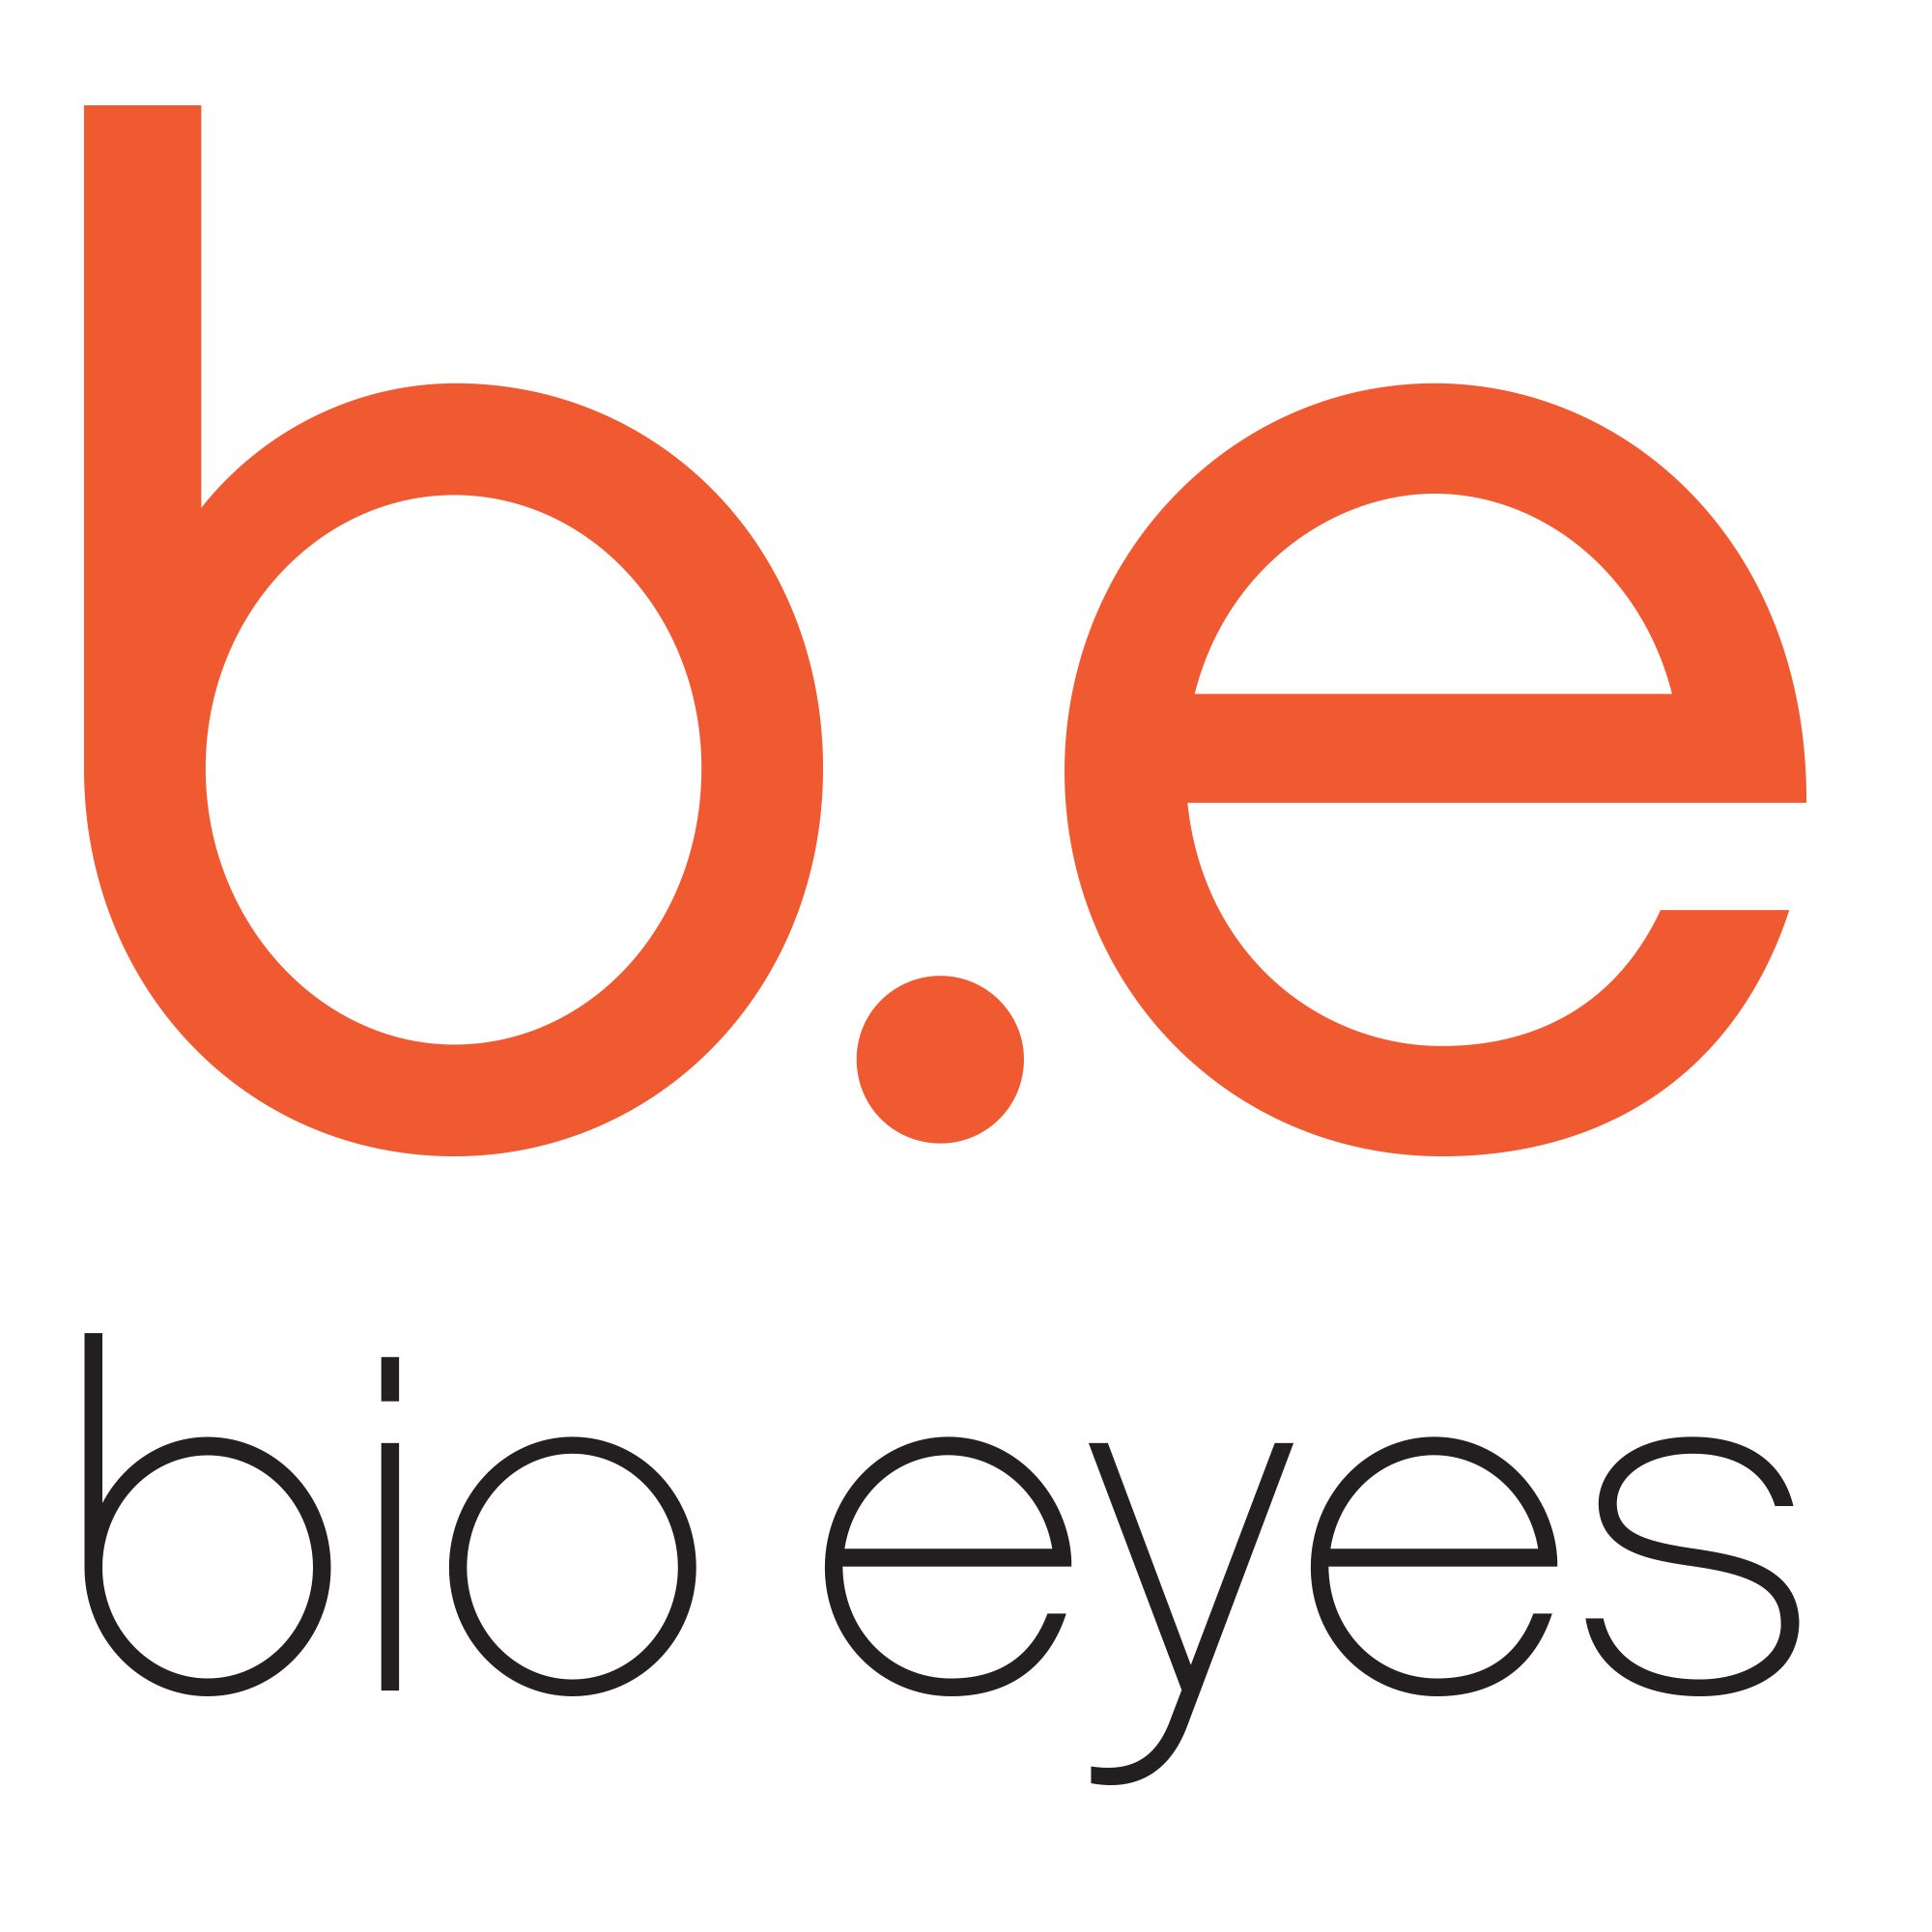 bio eyes